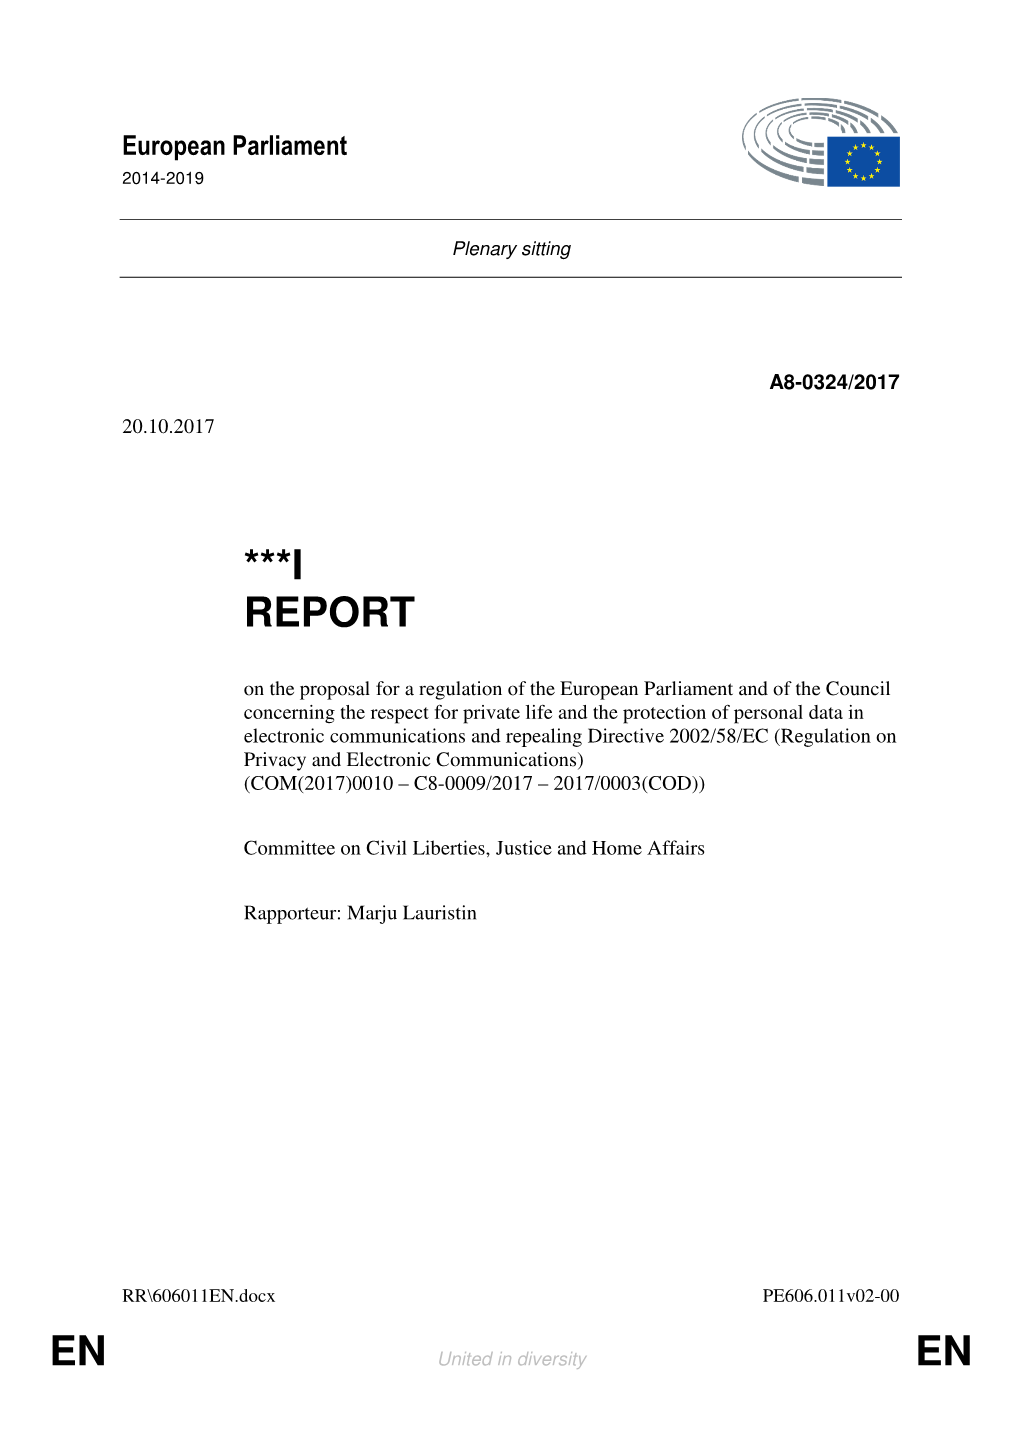 Final Report LIBE (003)